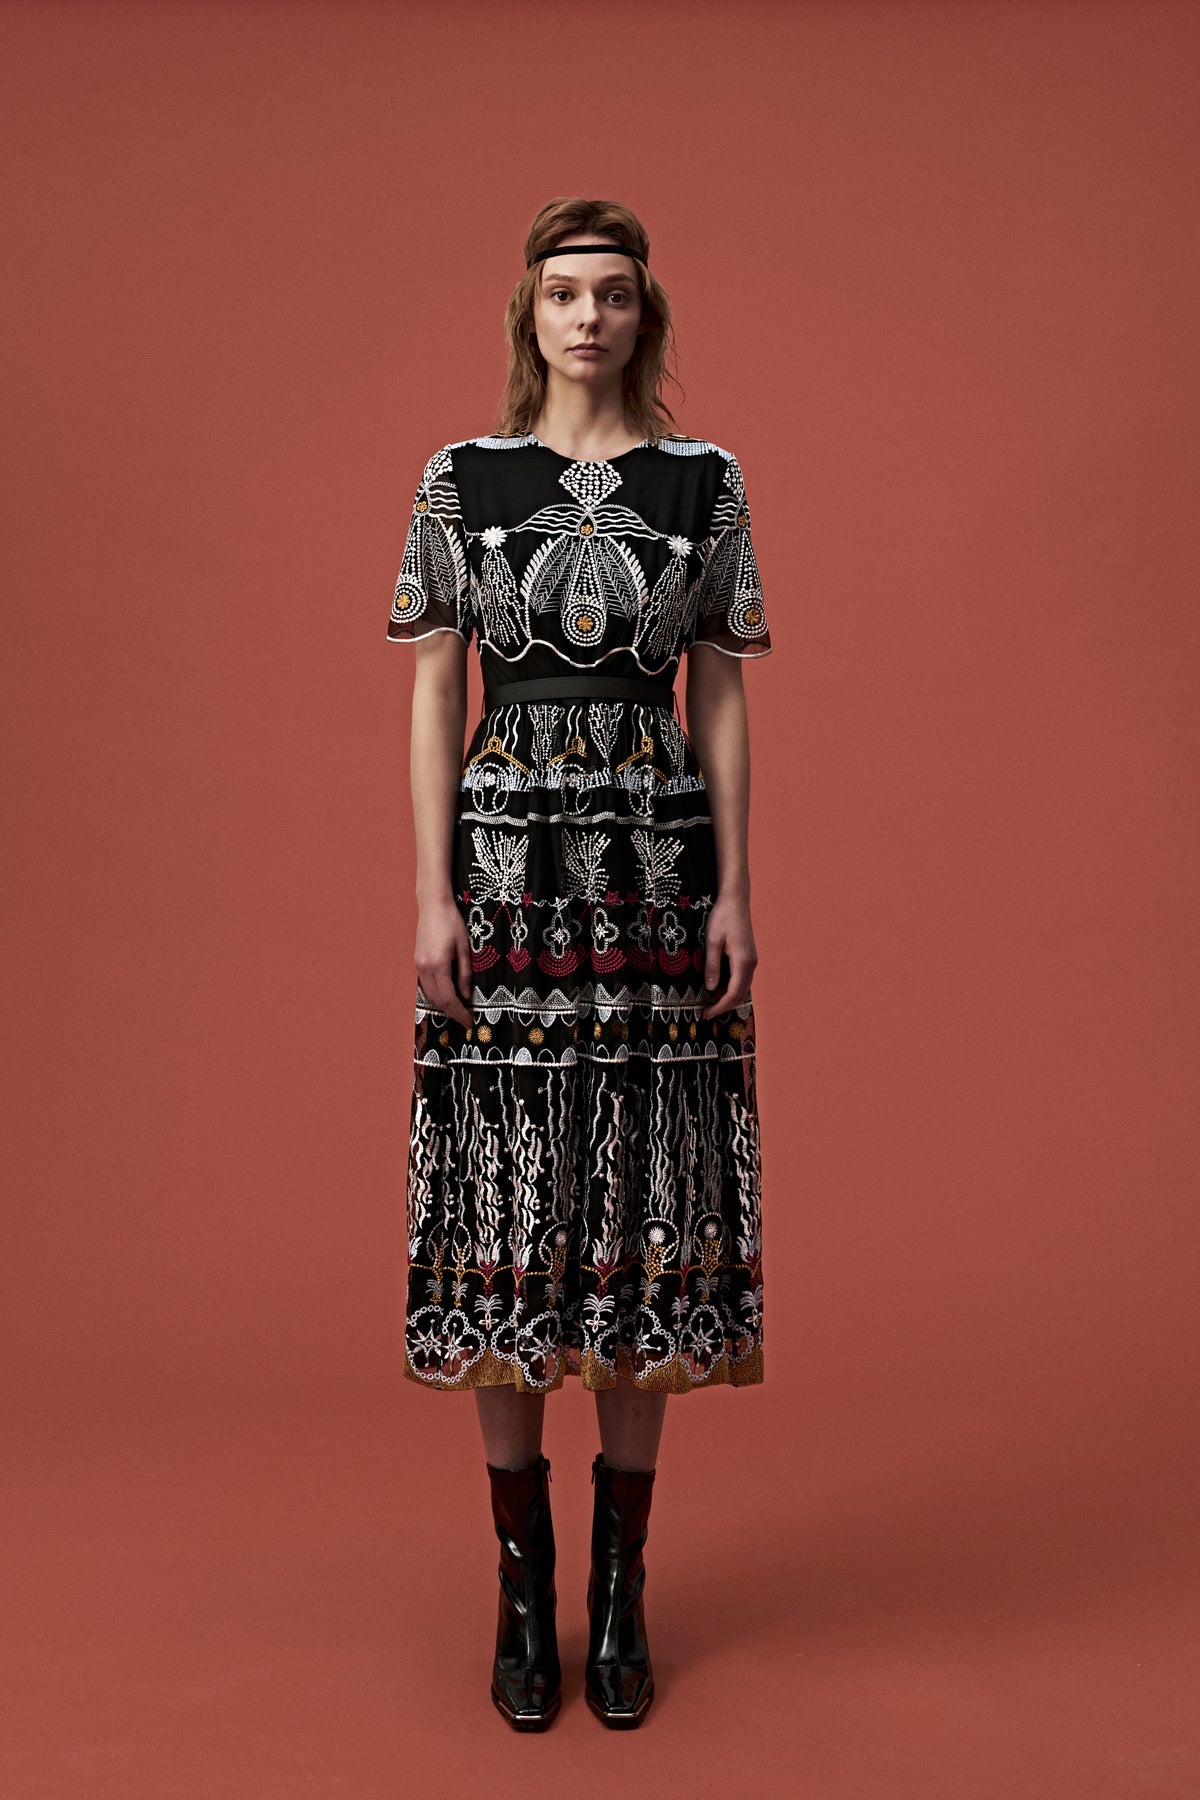 Vintage 80's Tribal Pattern Black Short Sleeve Dress - MOISELLE